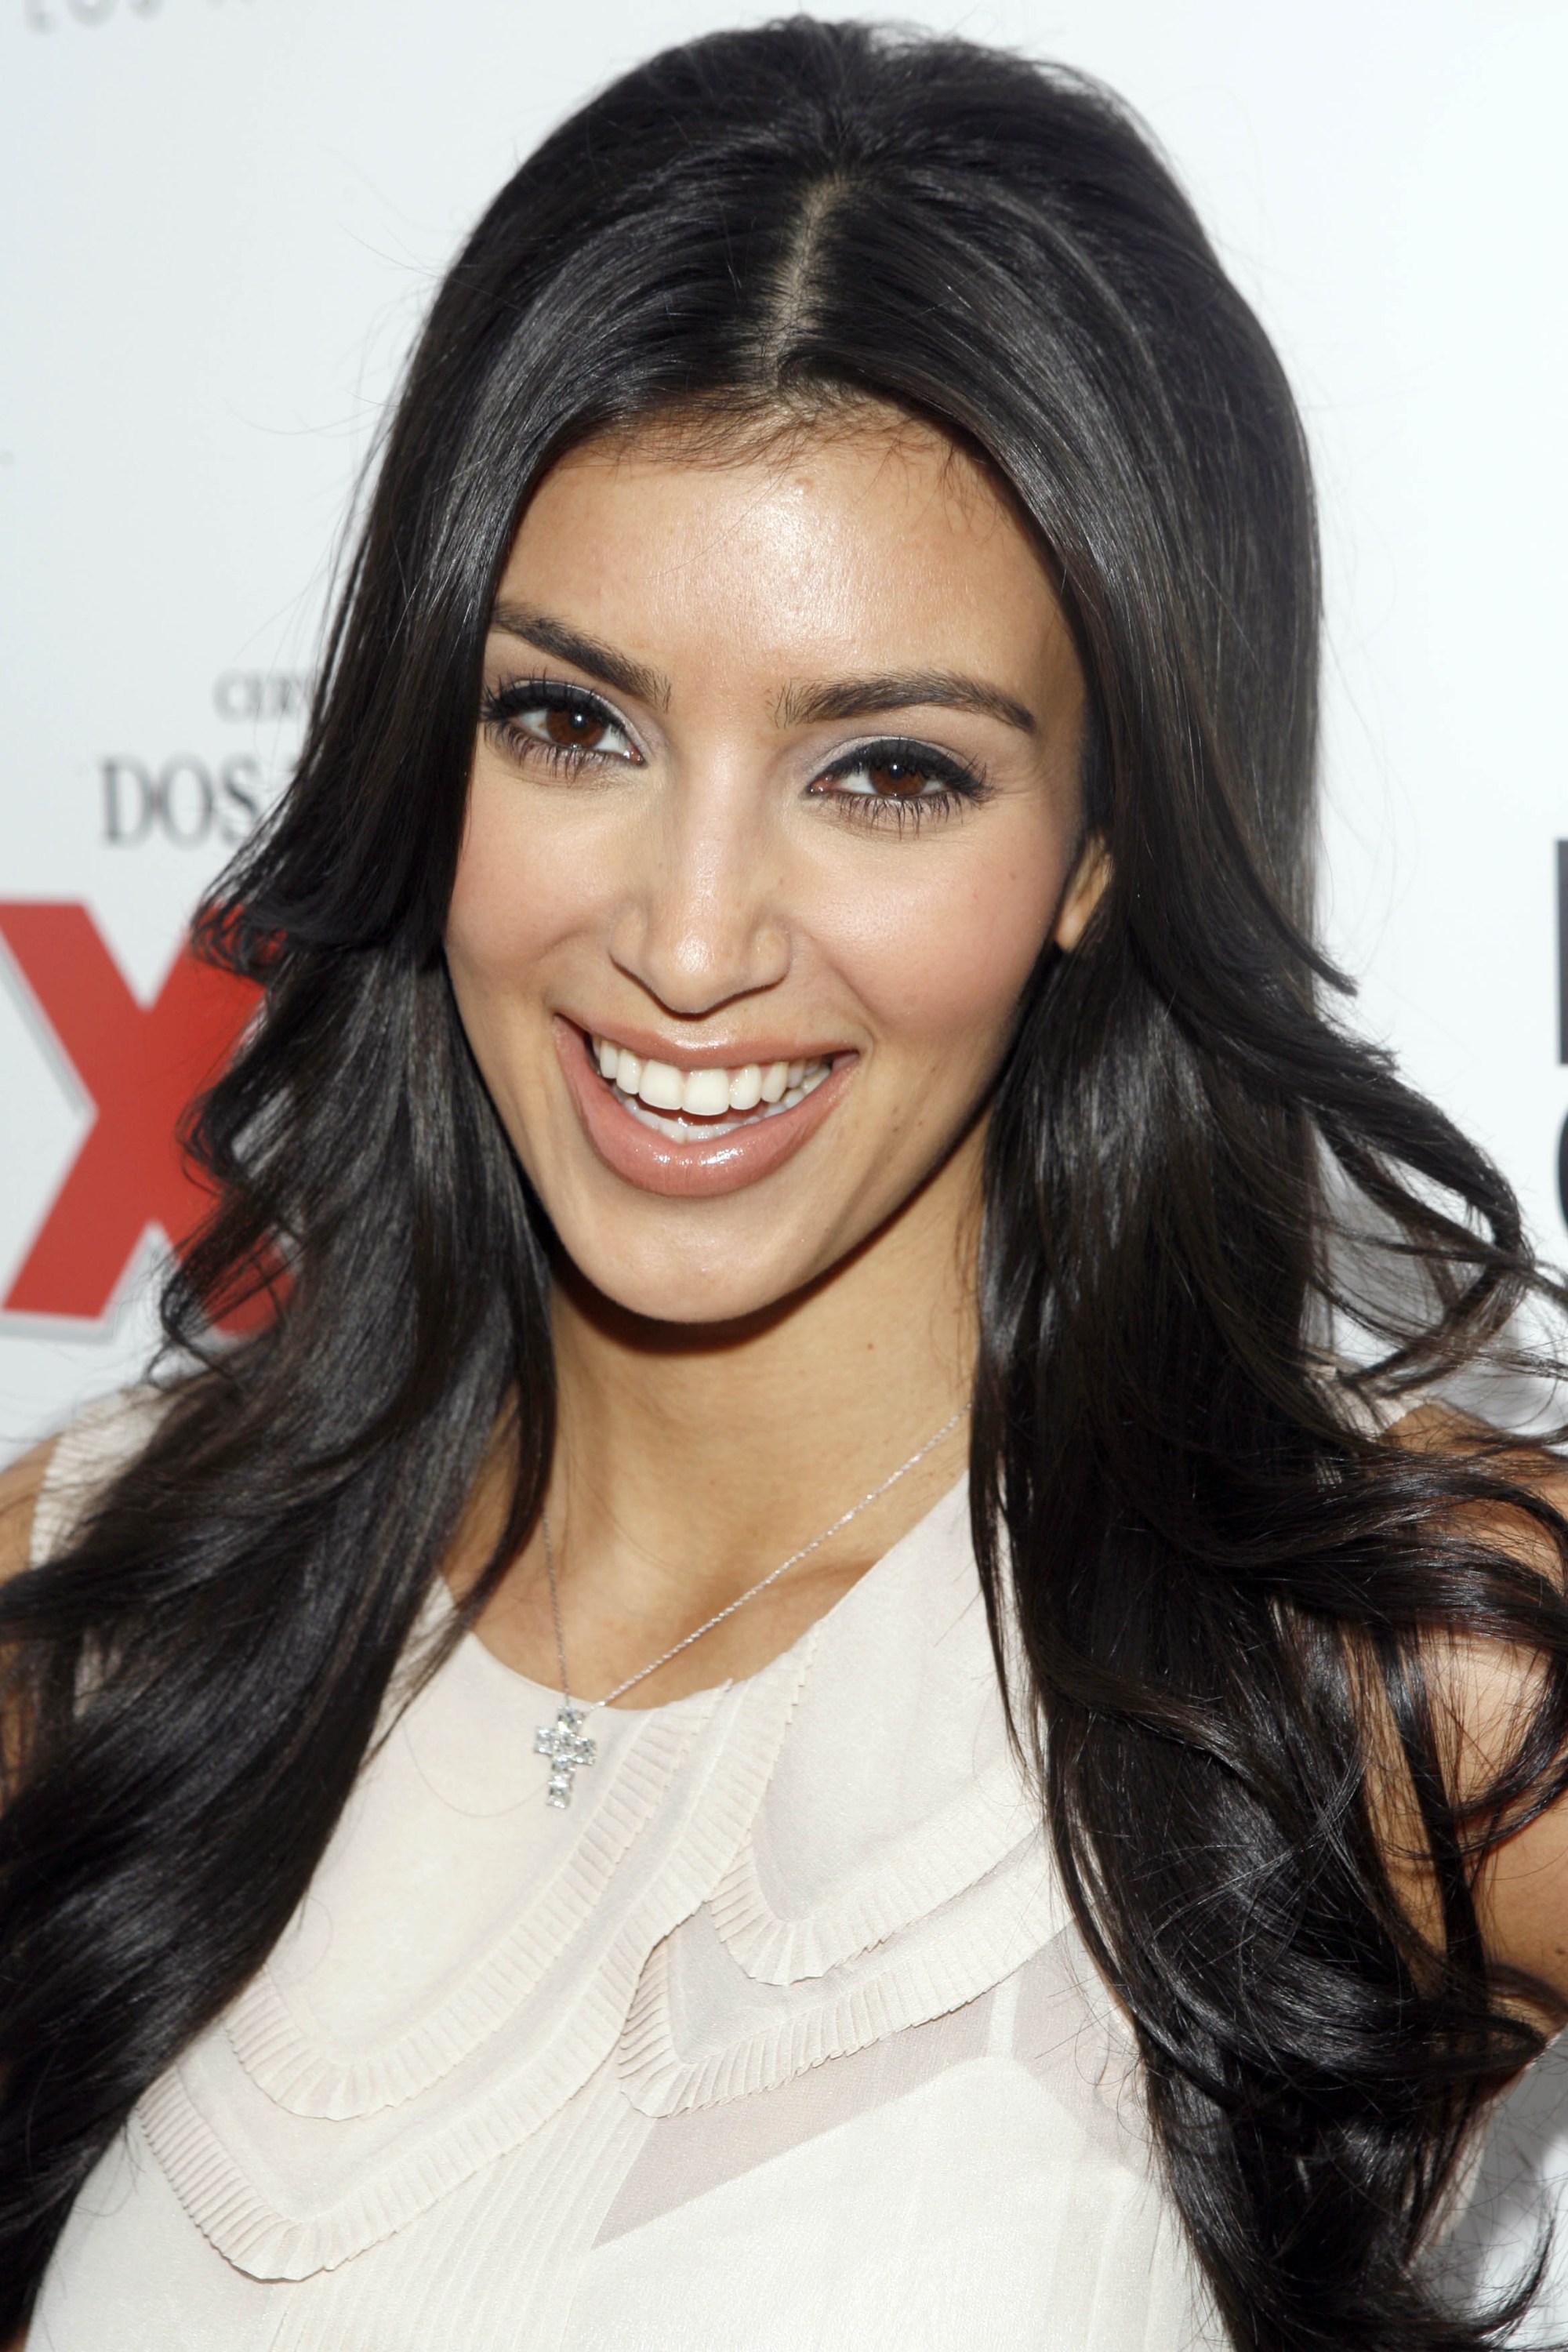 Kim Kardashian Claims She Had the "Hairiest Forehead" in 2008 — Check